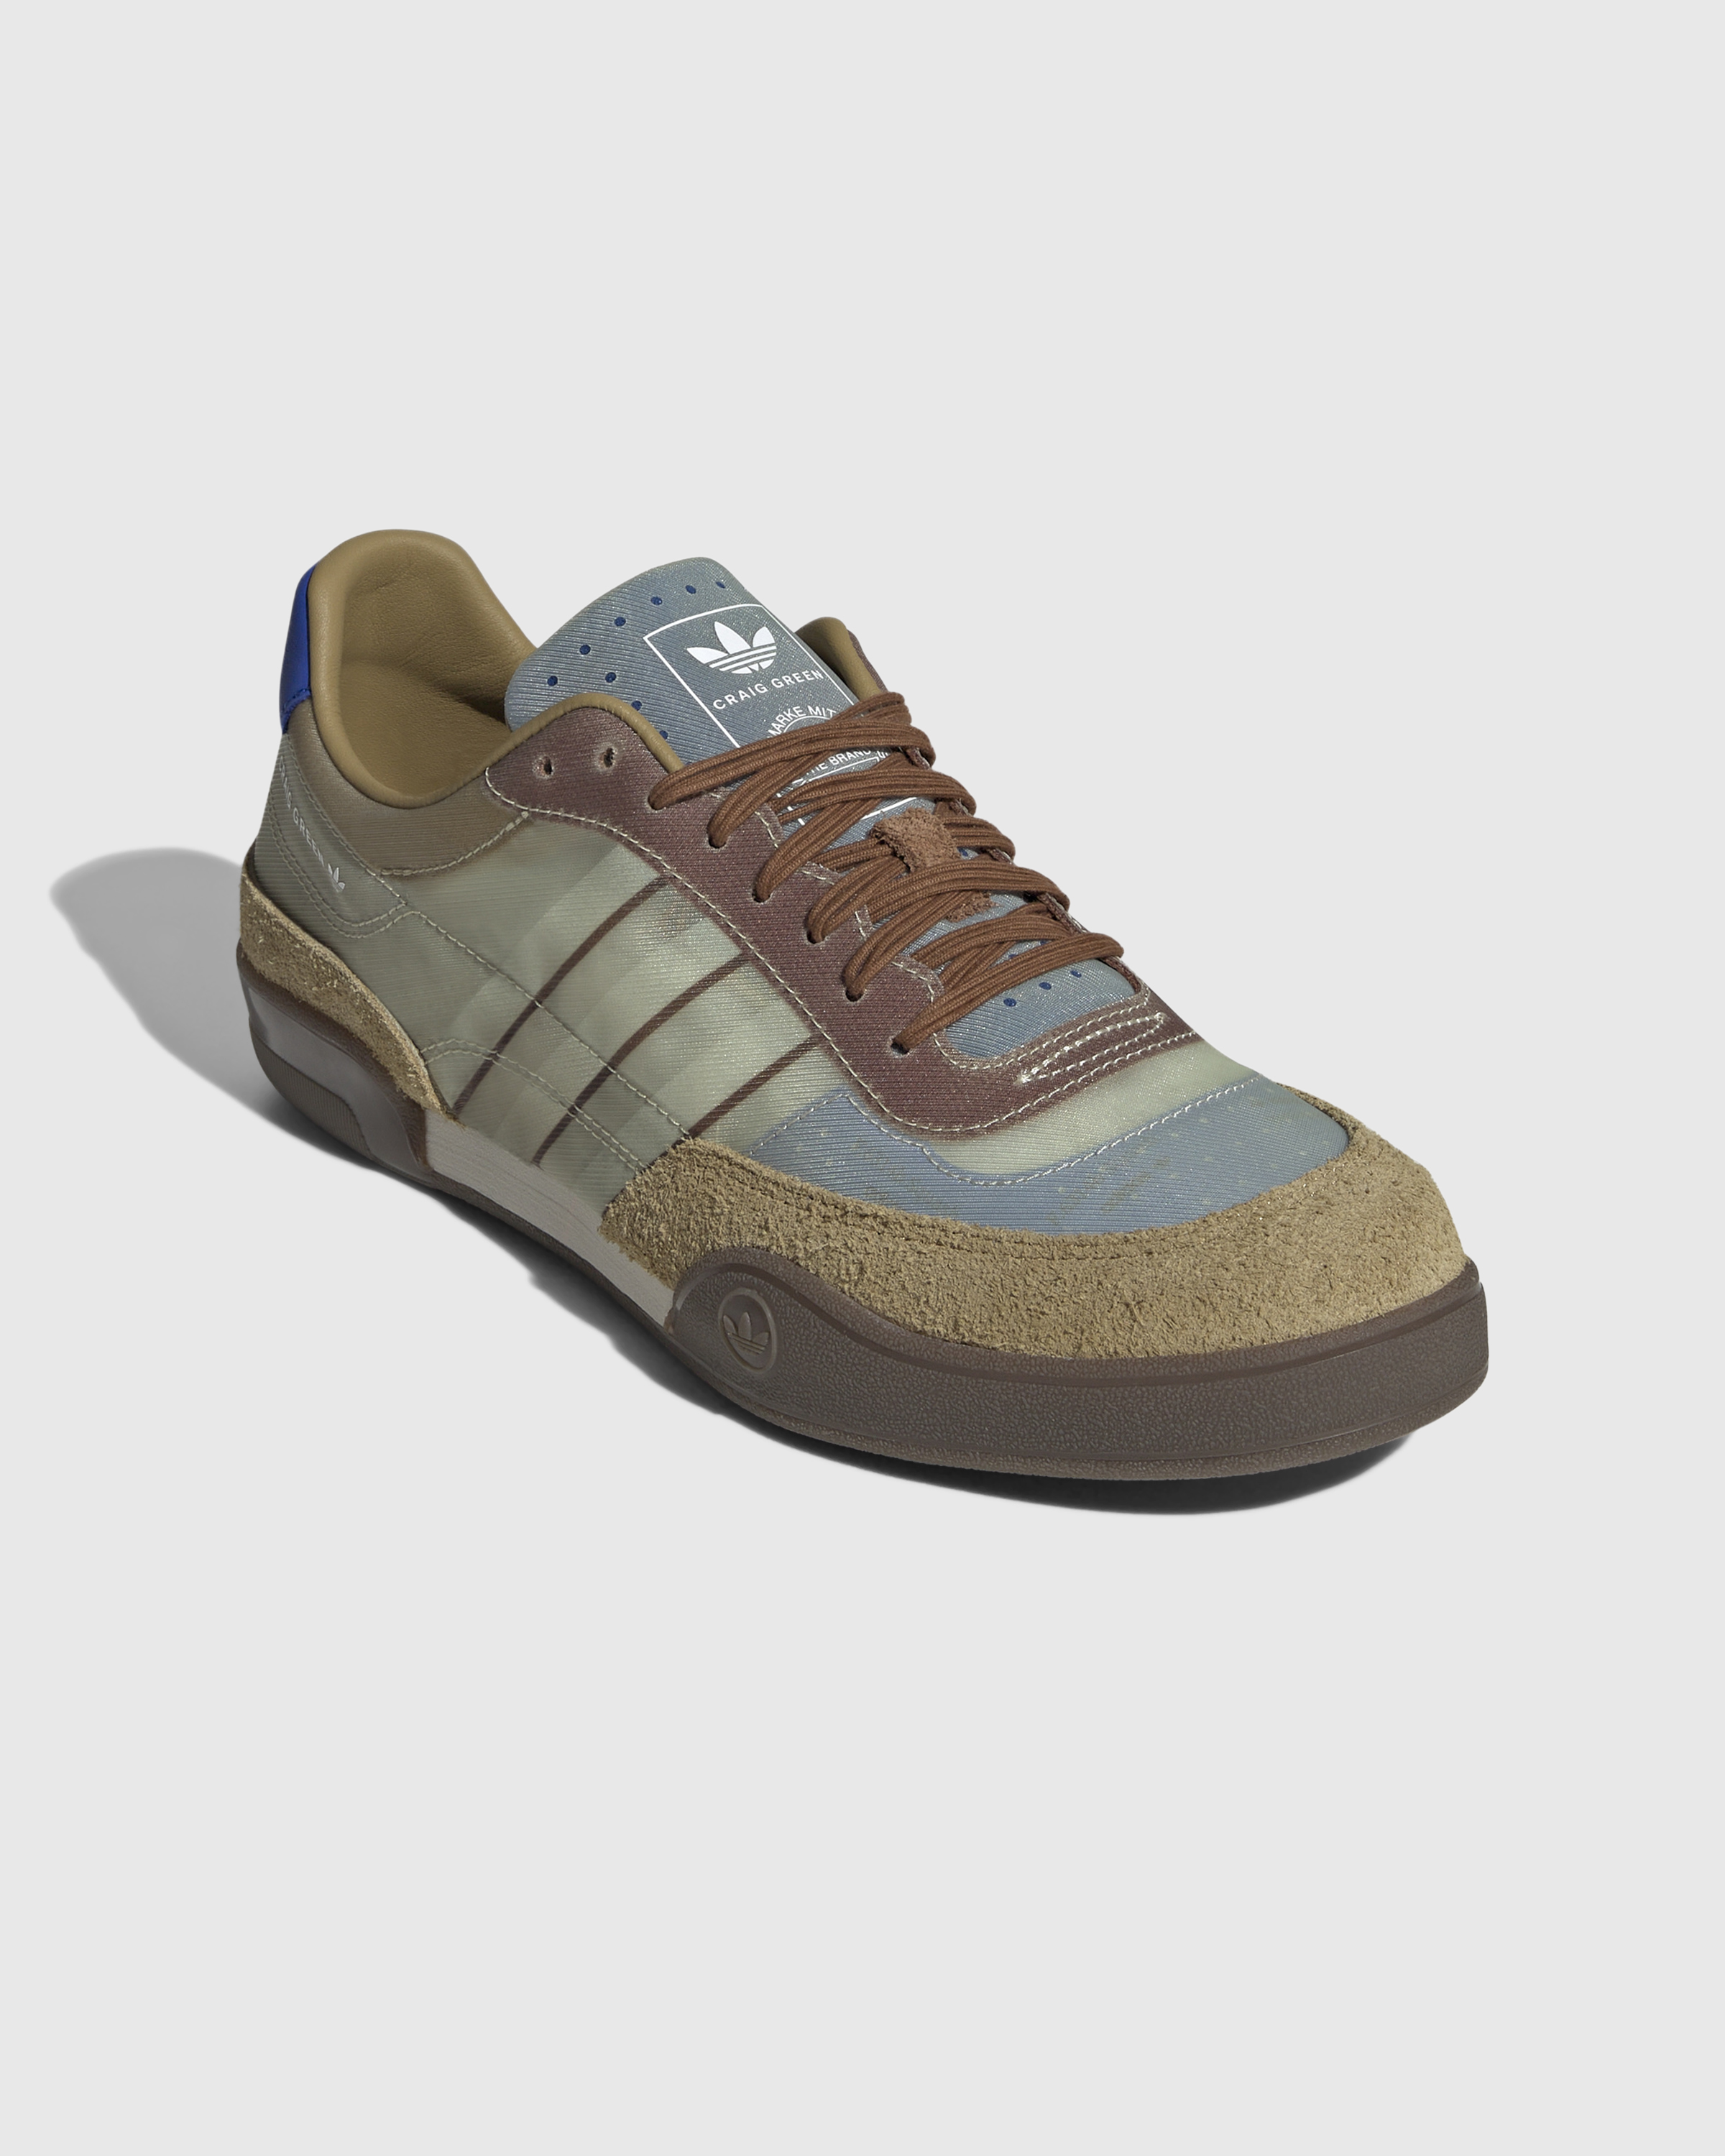 Adidas x Craig Green – Squash Polta Akh Dark Brown/Core Black/Blue - Low Top Sneakers - Brown - Image 3